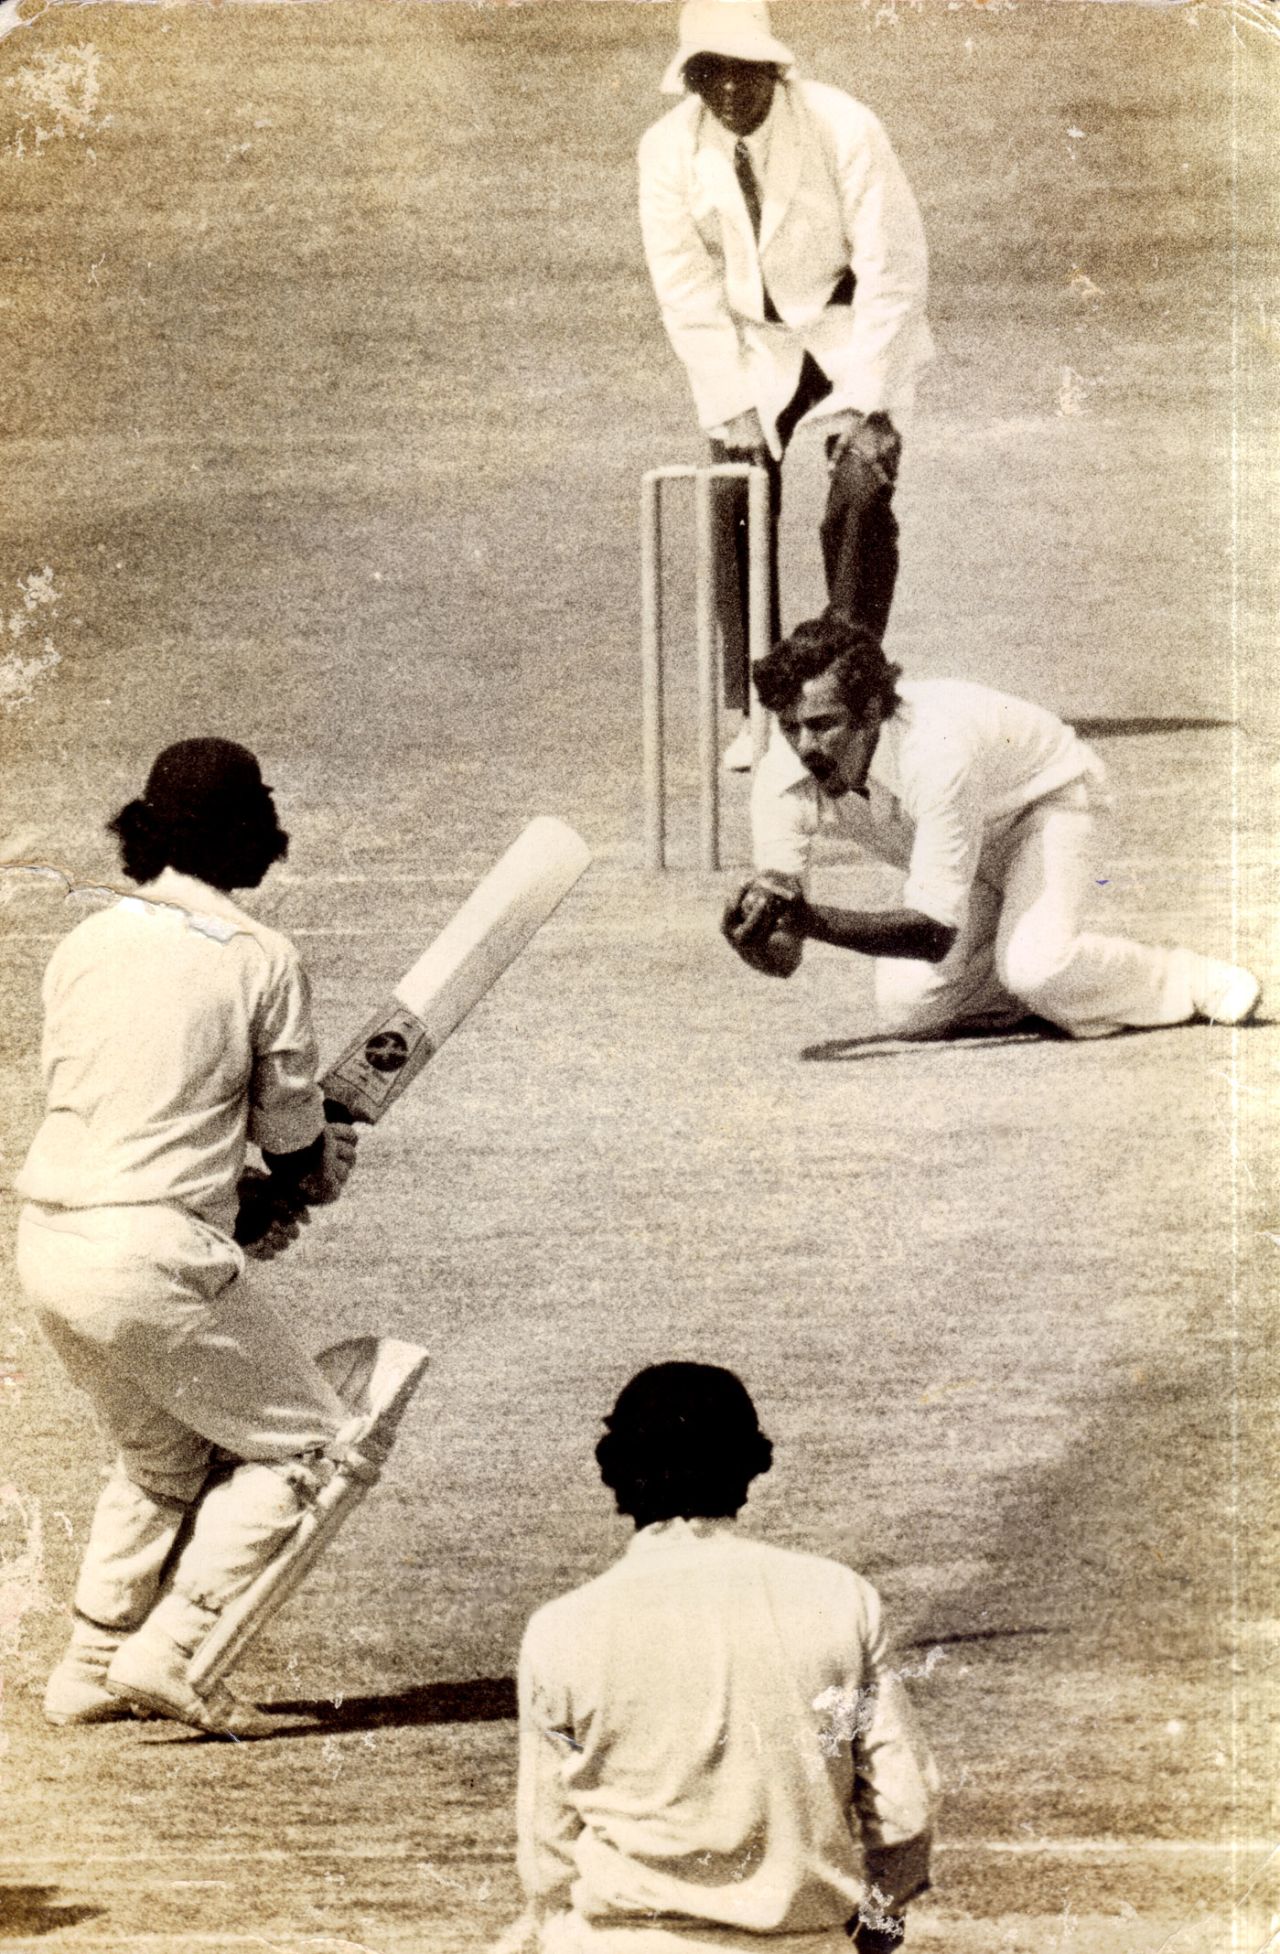 Offspinnner V Ramnarayan catches Gundappa Viswanath for 67 off his own bowling, Karnataka v Hyderabad, Ranji Trophy South Zone League, Bangalore, 1st day, December 4, 1976